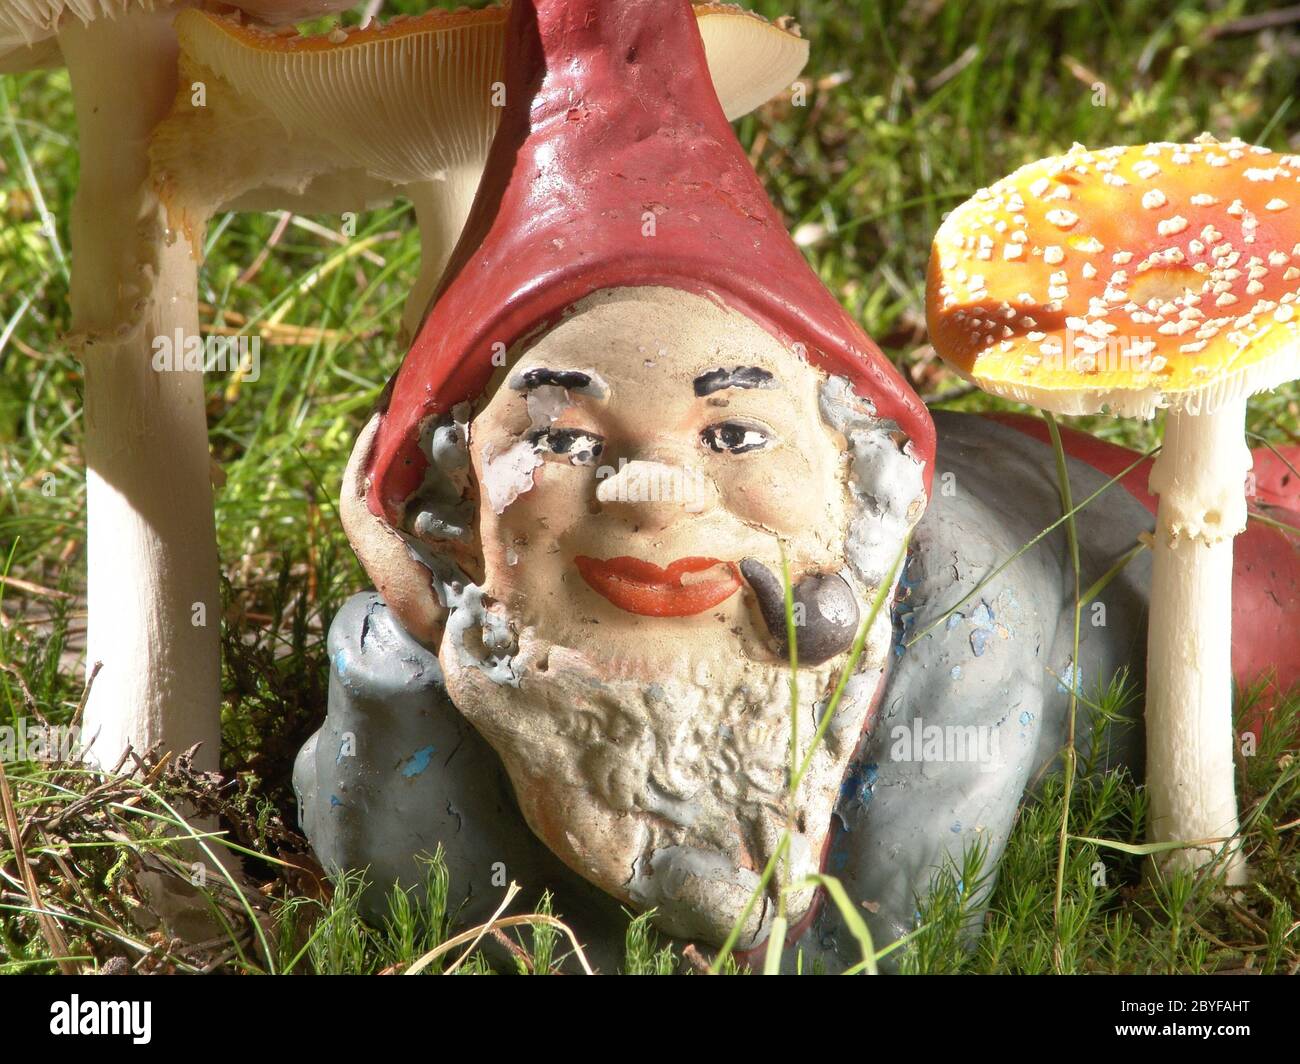 Garden gnome and mushrooms Stock Photo